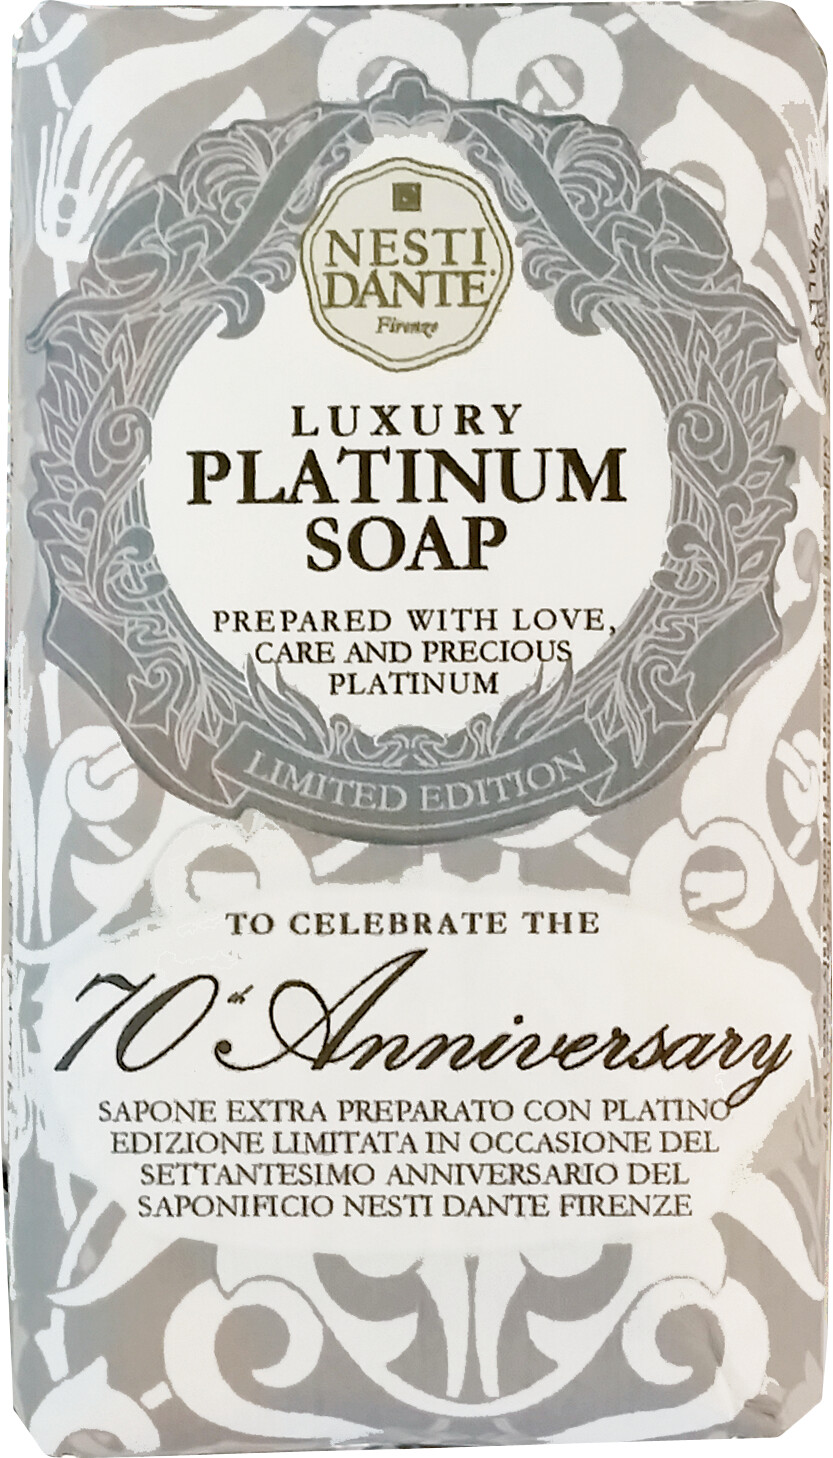 Nesti Dante Luxury Platinum Soap 70th Anniversary Edition 250g